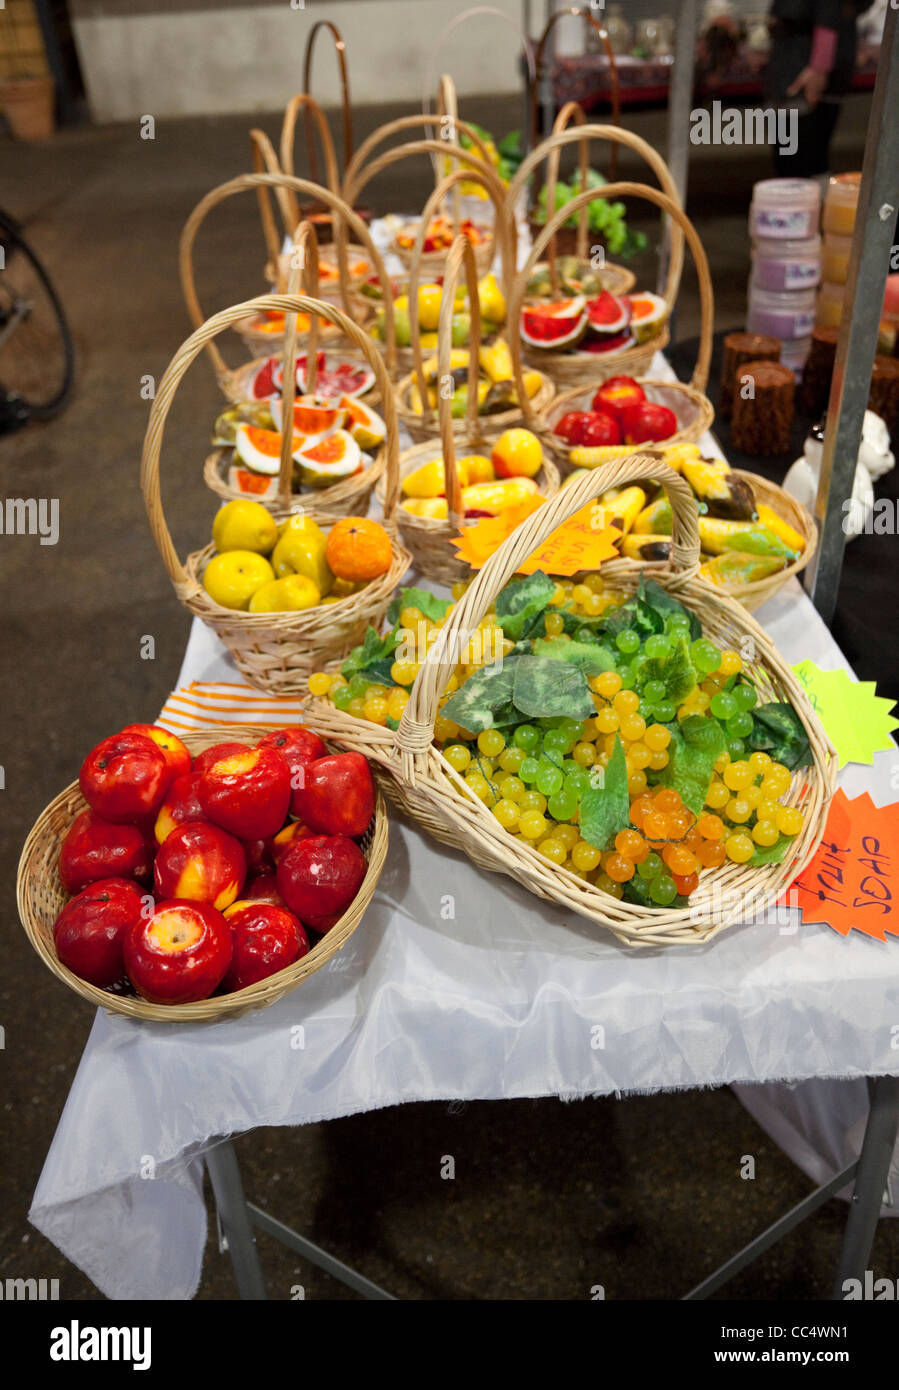 A table with fruit baskets for sale, Spitalfields Market, London, England,  UK Stock Photo - Alamy